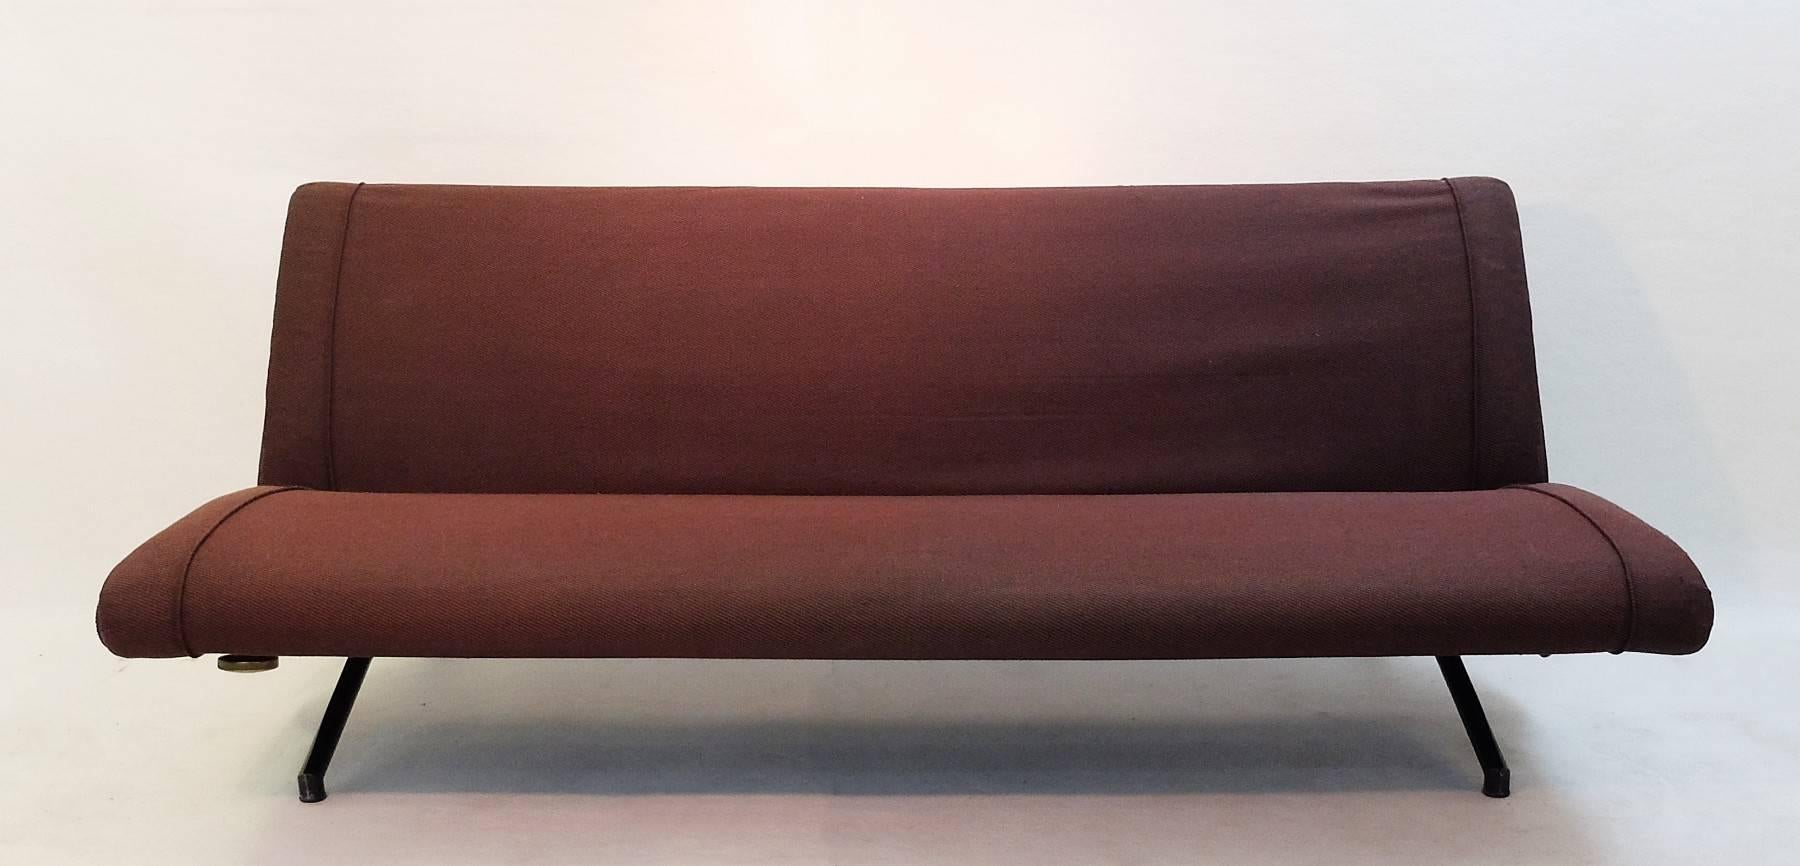 Sofa daybed D70 designed by Osvaldo Borsani for Tecno, original brown ribbed upholstery.